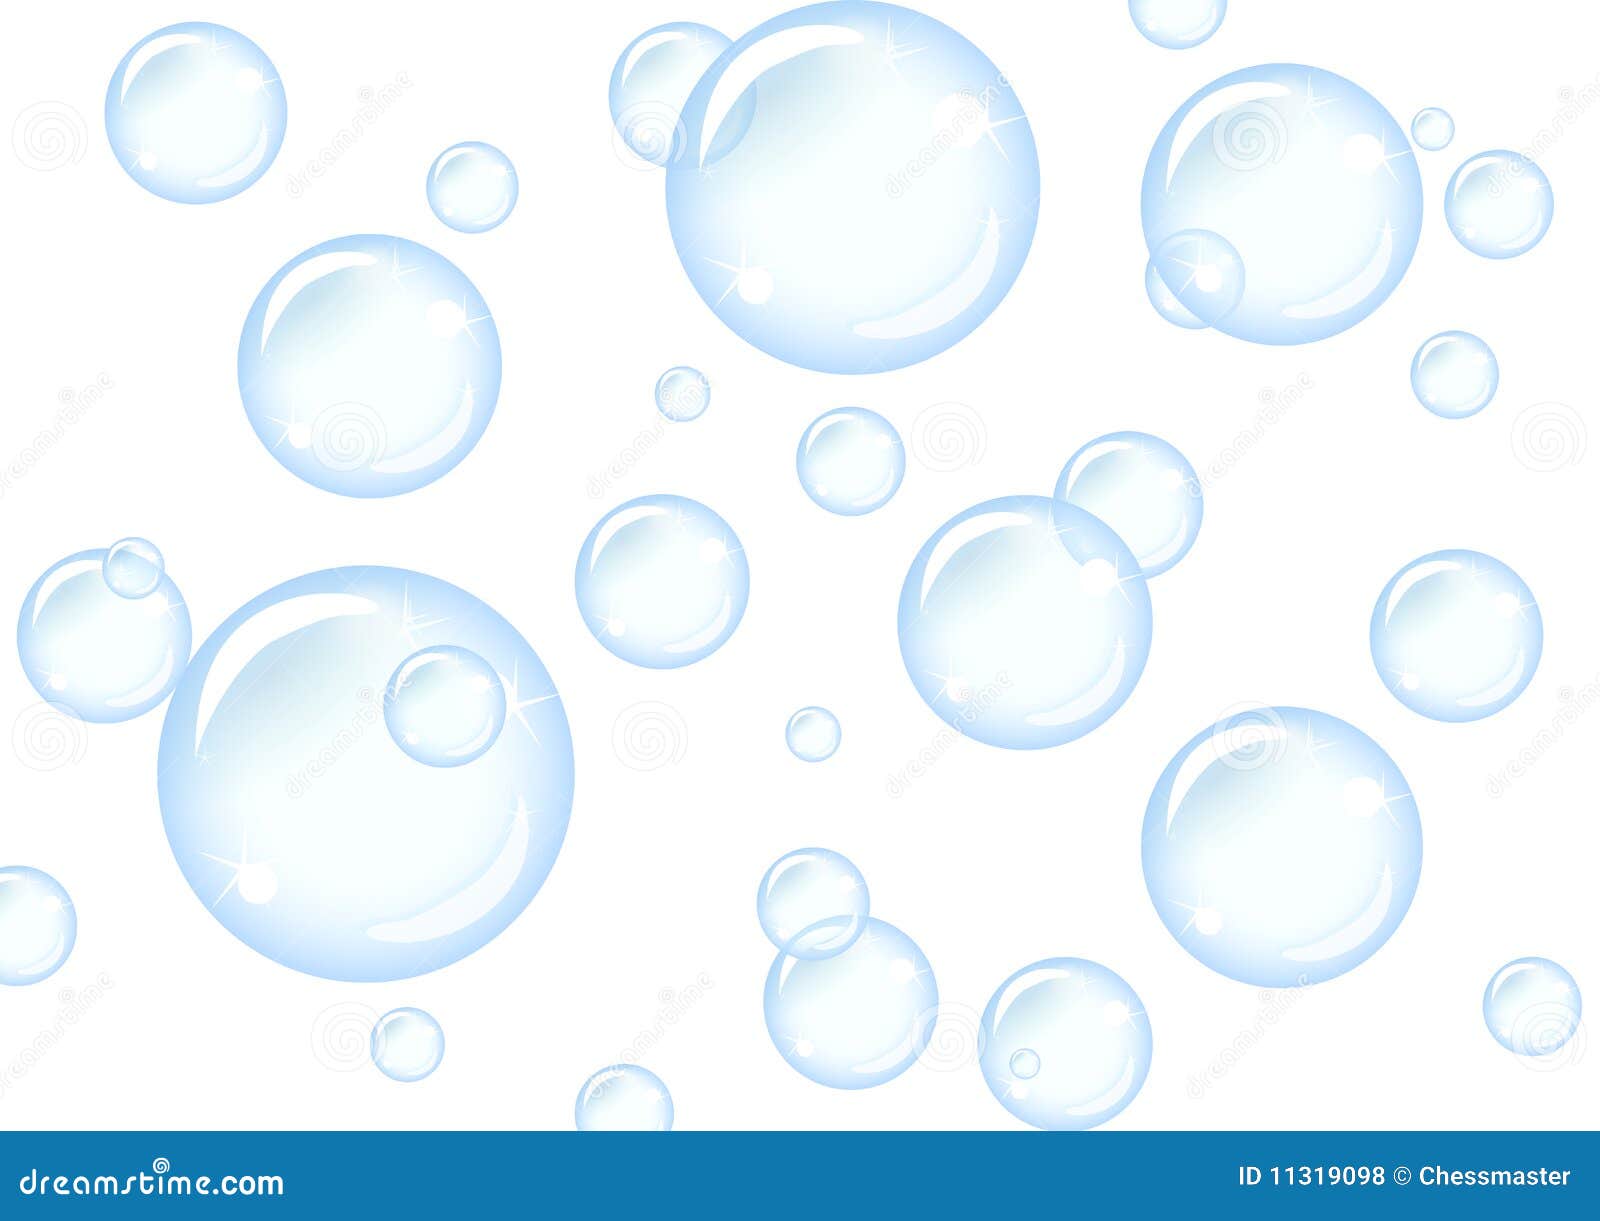 bubbles made in illustrator cs4